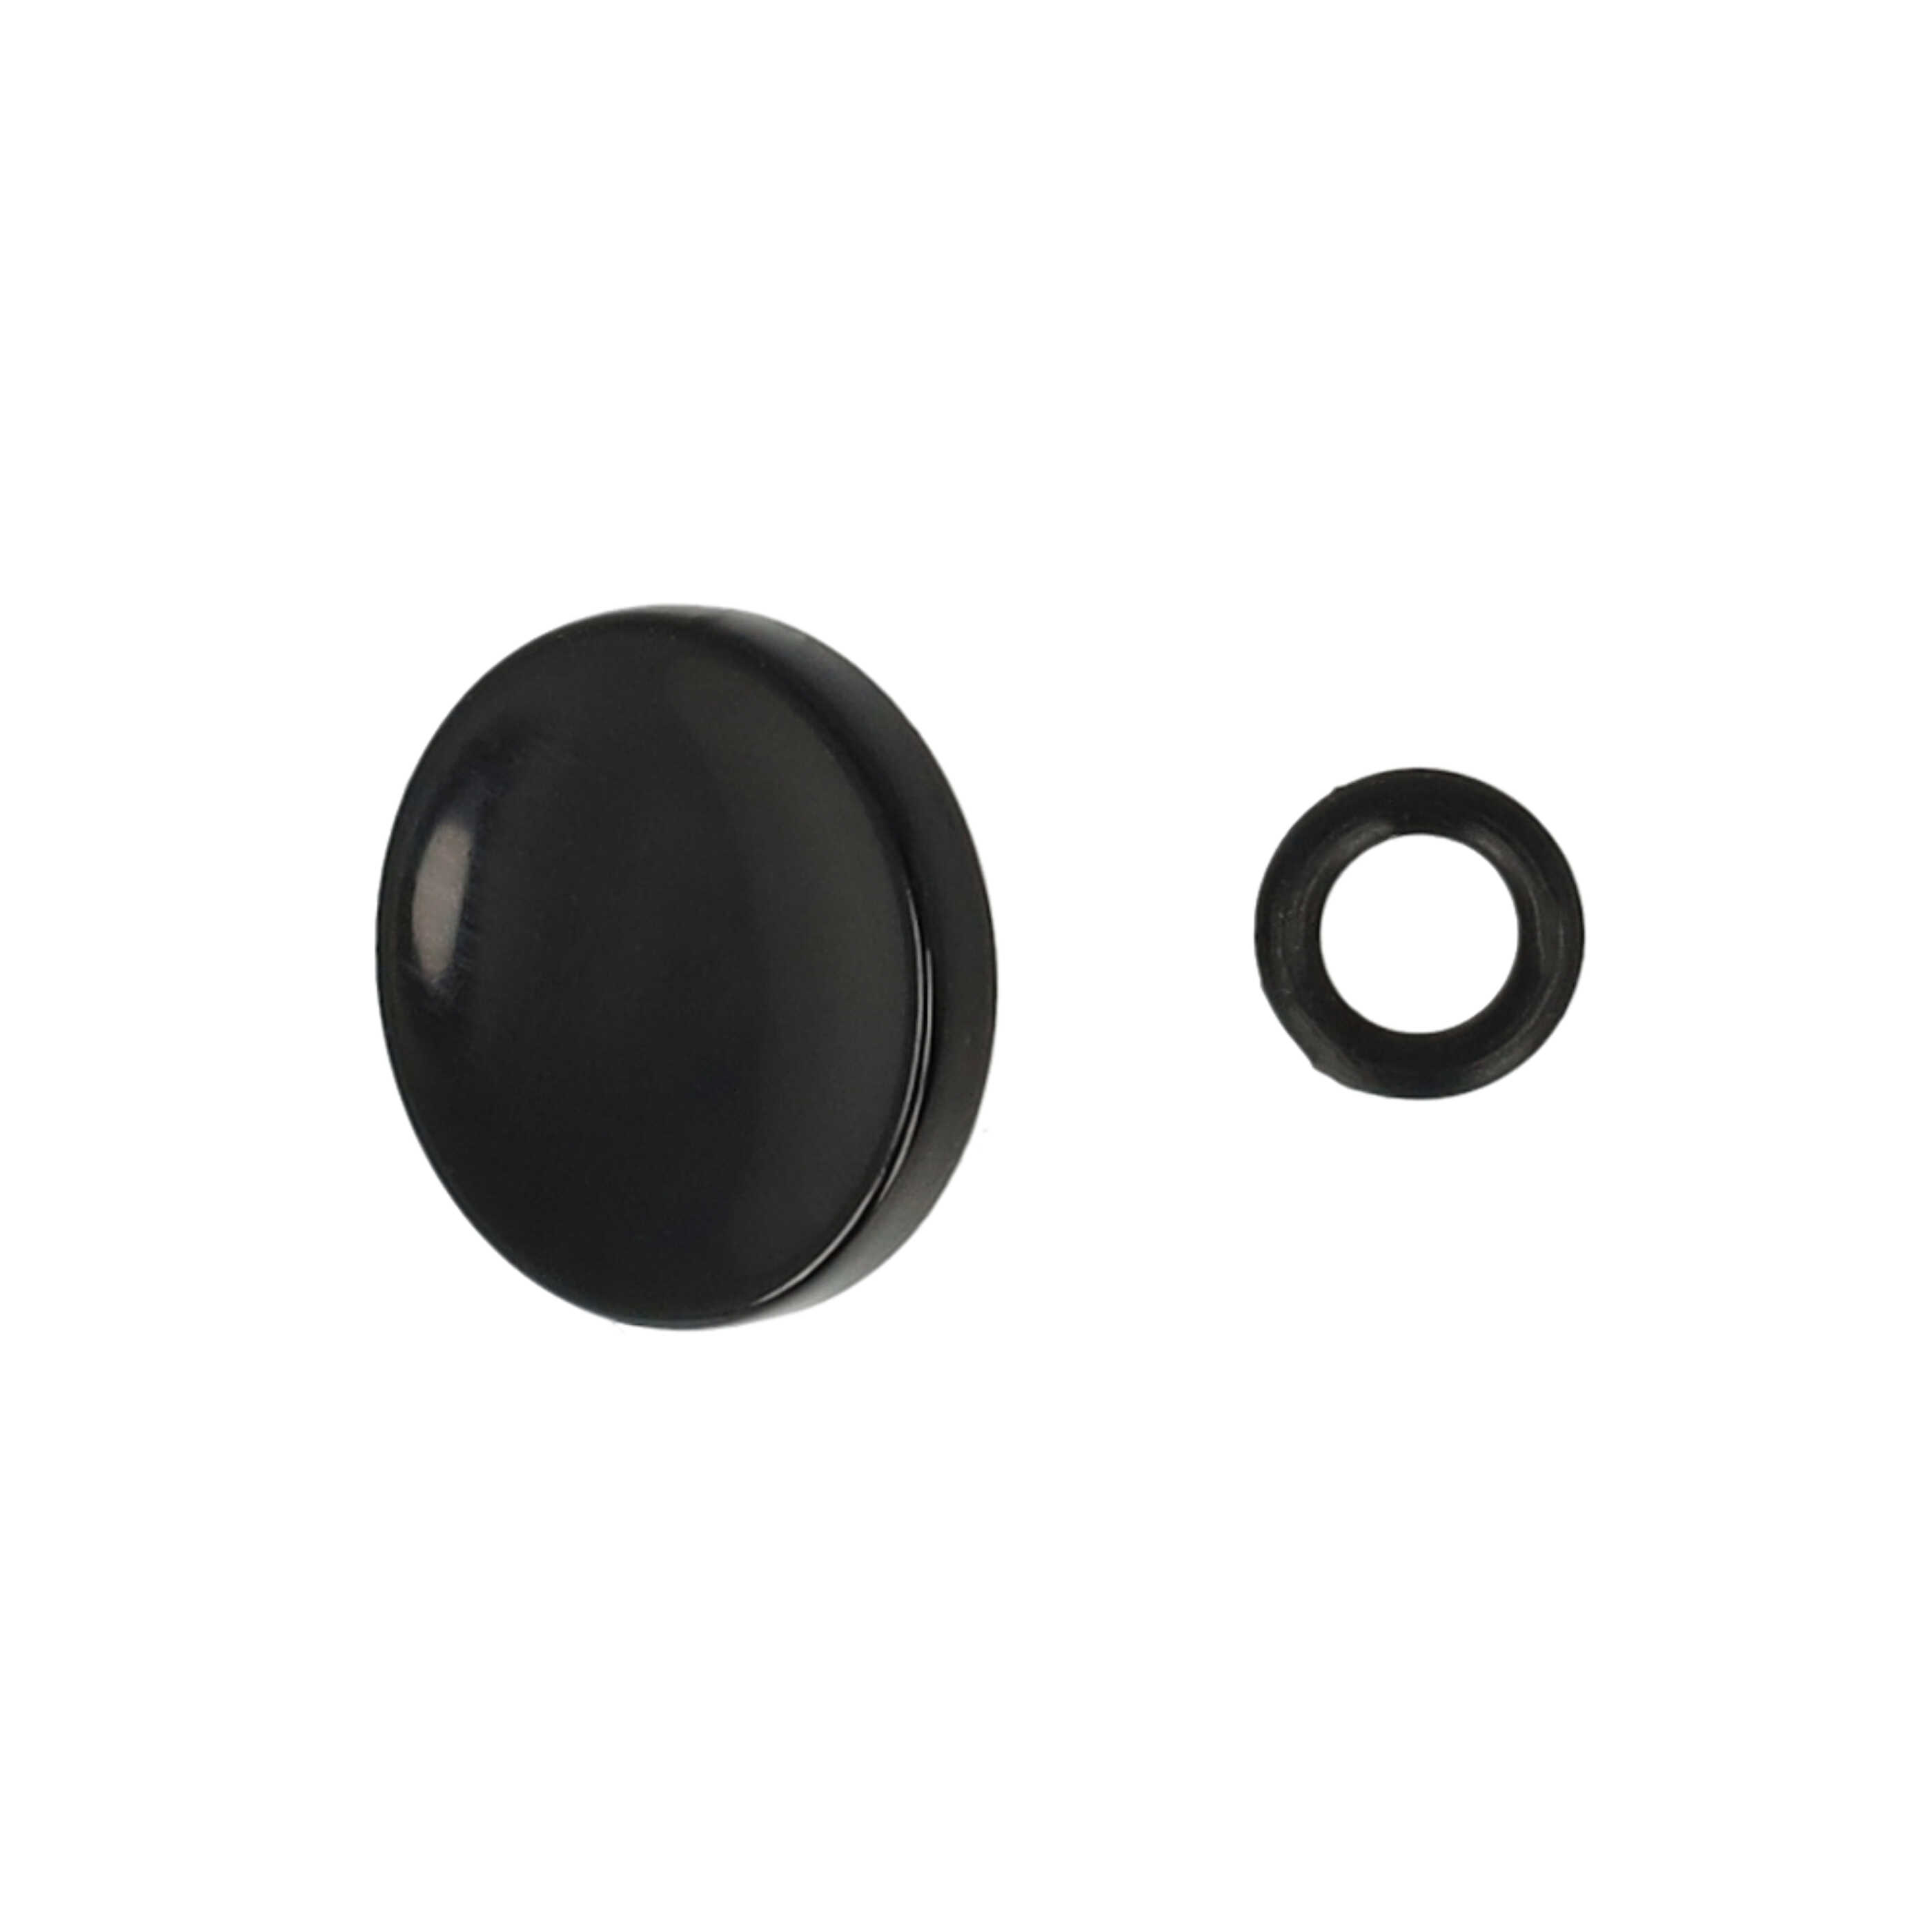 Release Button suitable for X-E1 FujifilmCamera etc. - Metal, Black